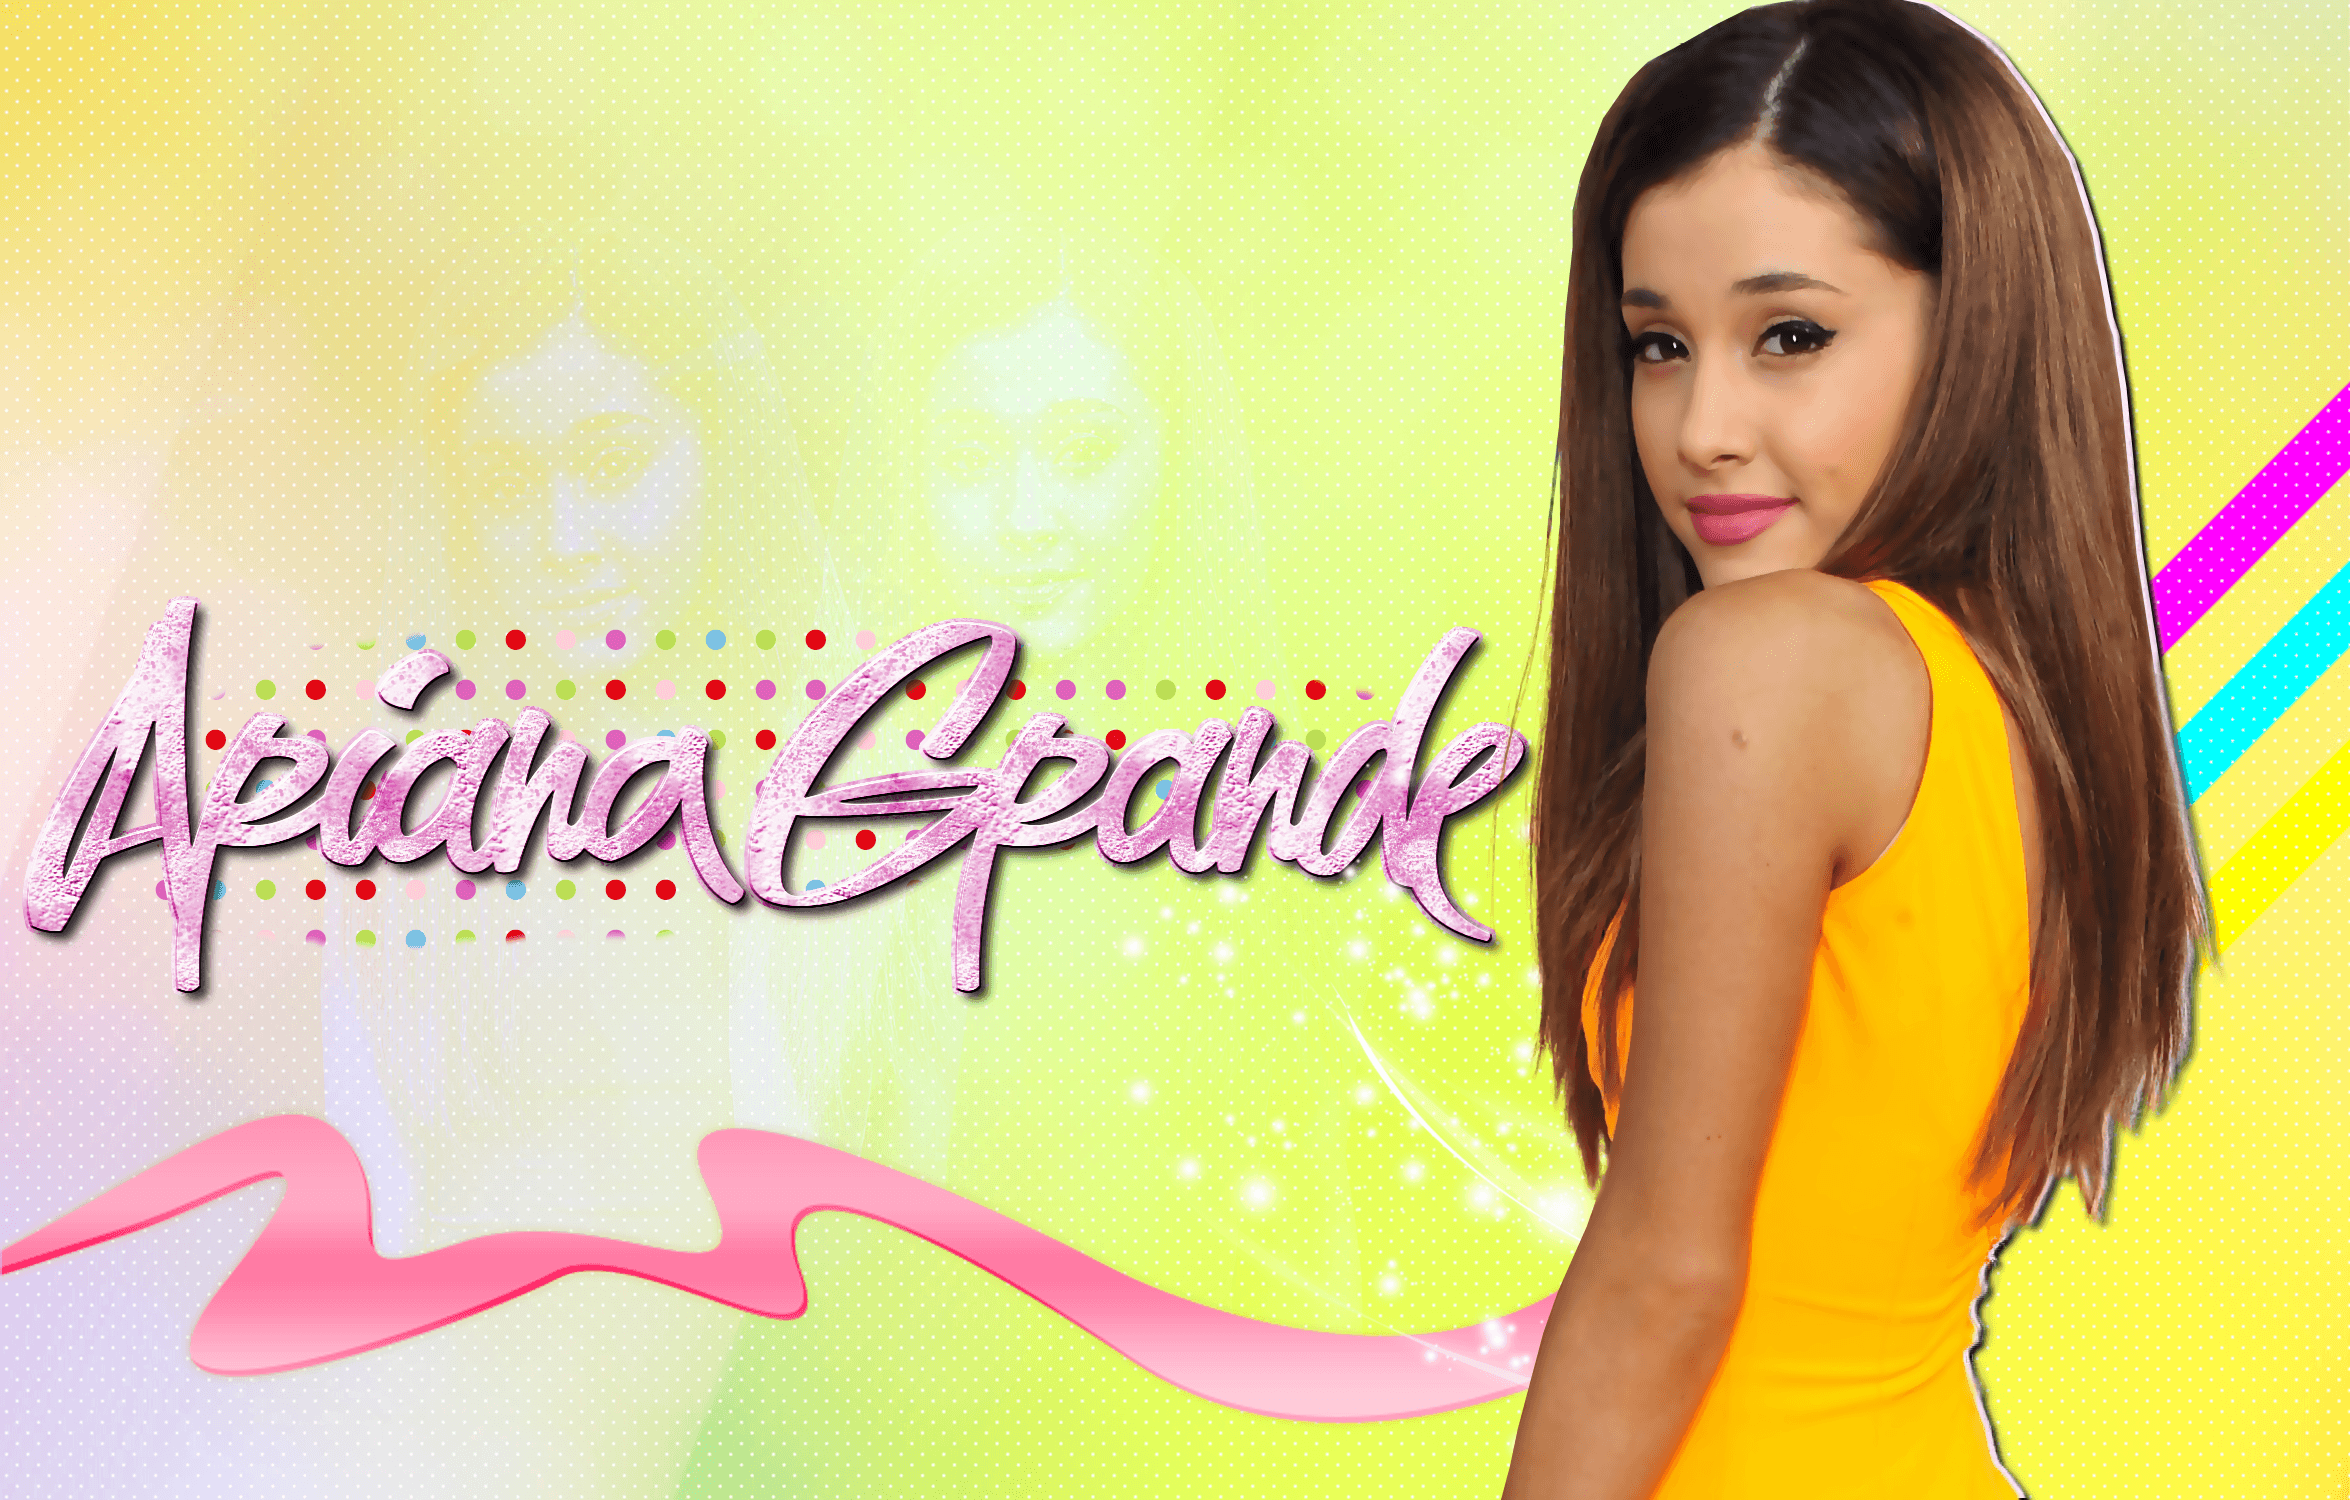 Ariana Grande HD desktop wallpaper download. Ariana grande